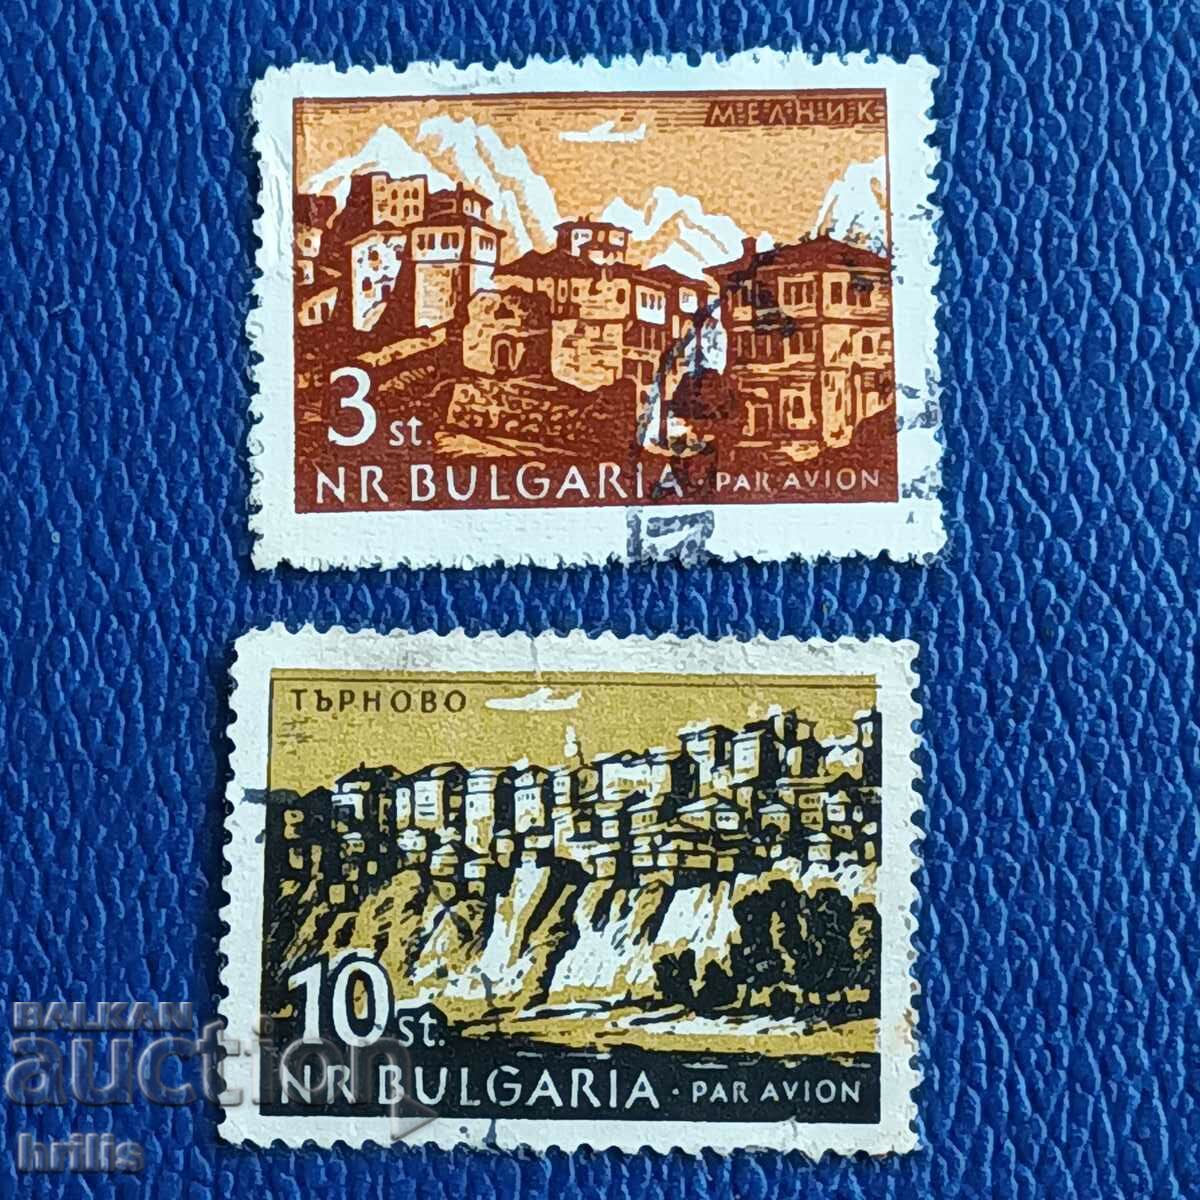 BULGARIA - MELNIK TARNOVO